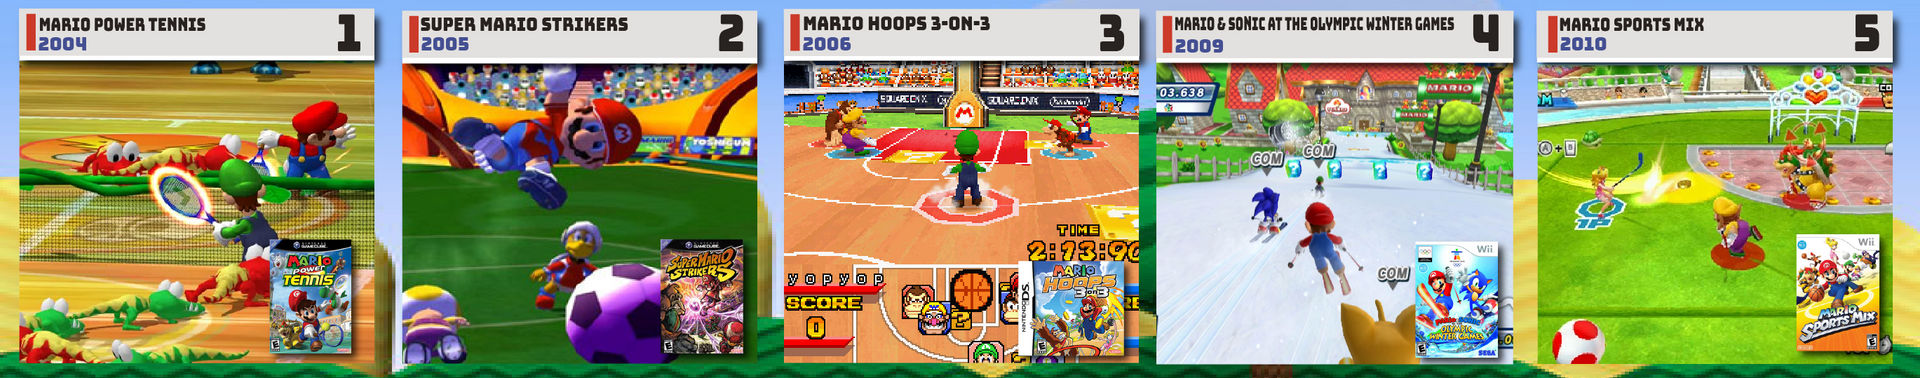 Favorite Mario Sports Games